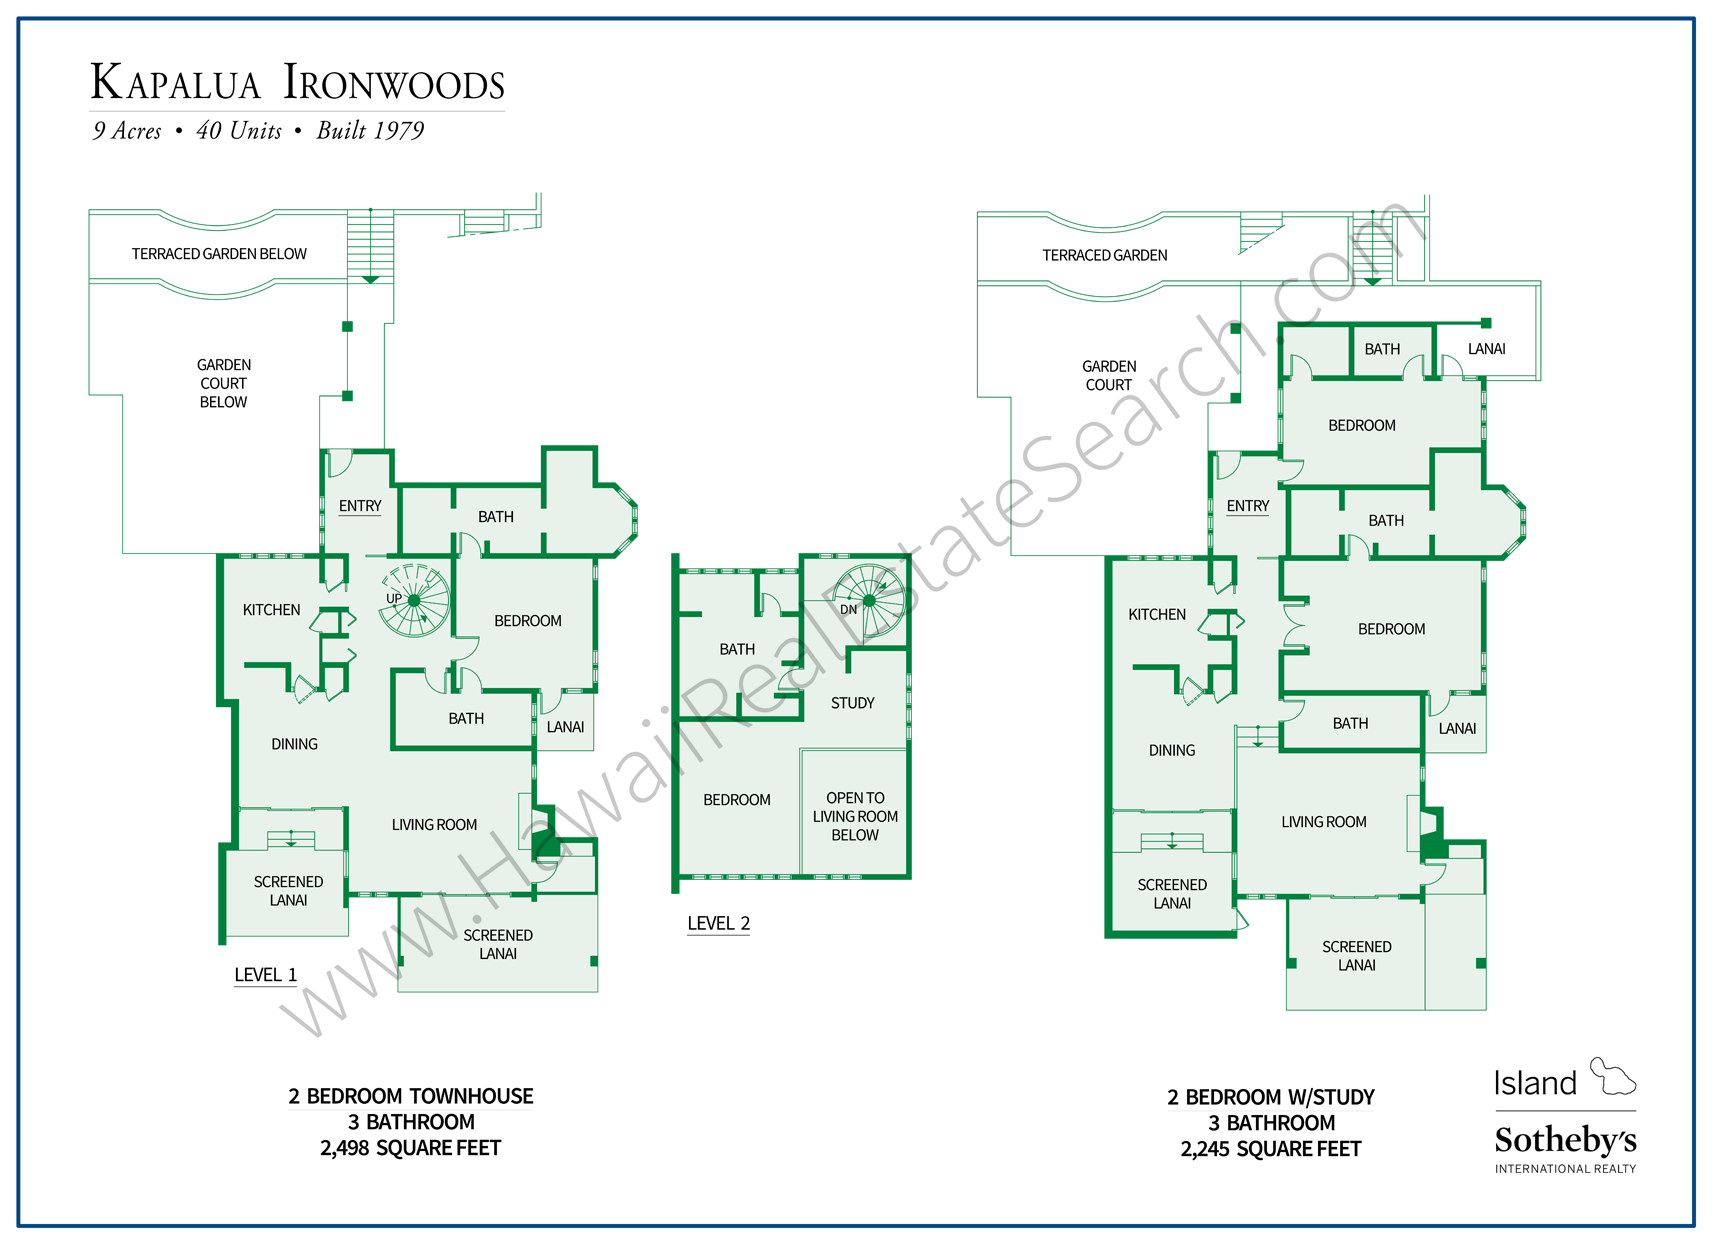 kapalua ironwoods floor plan 2 br